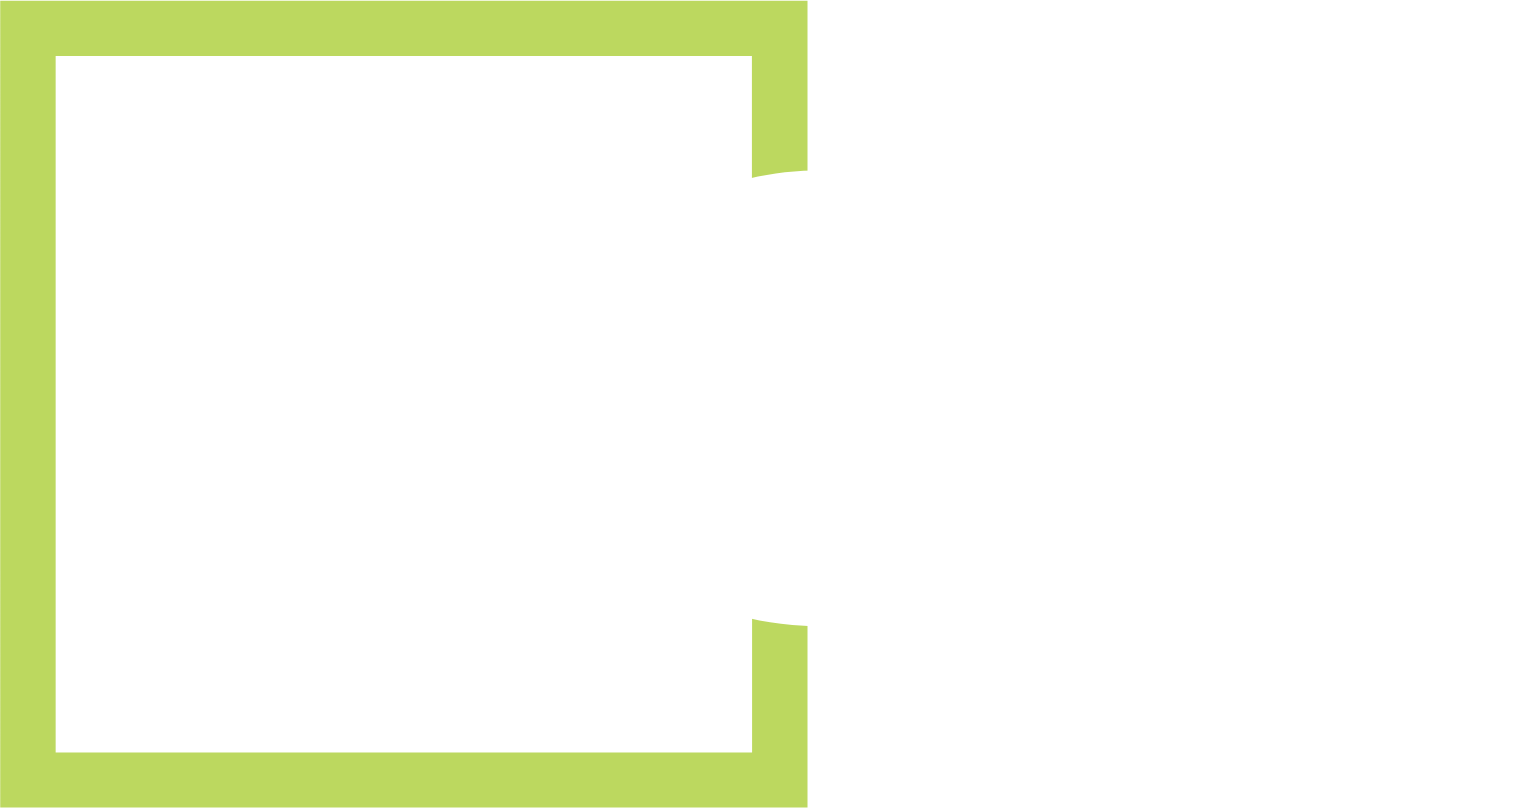 LSB Industries logo large for dark backgrounds (transparent PNG)